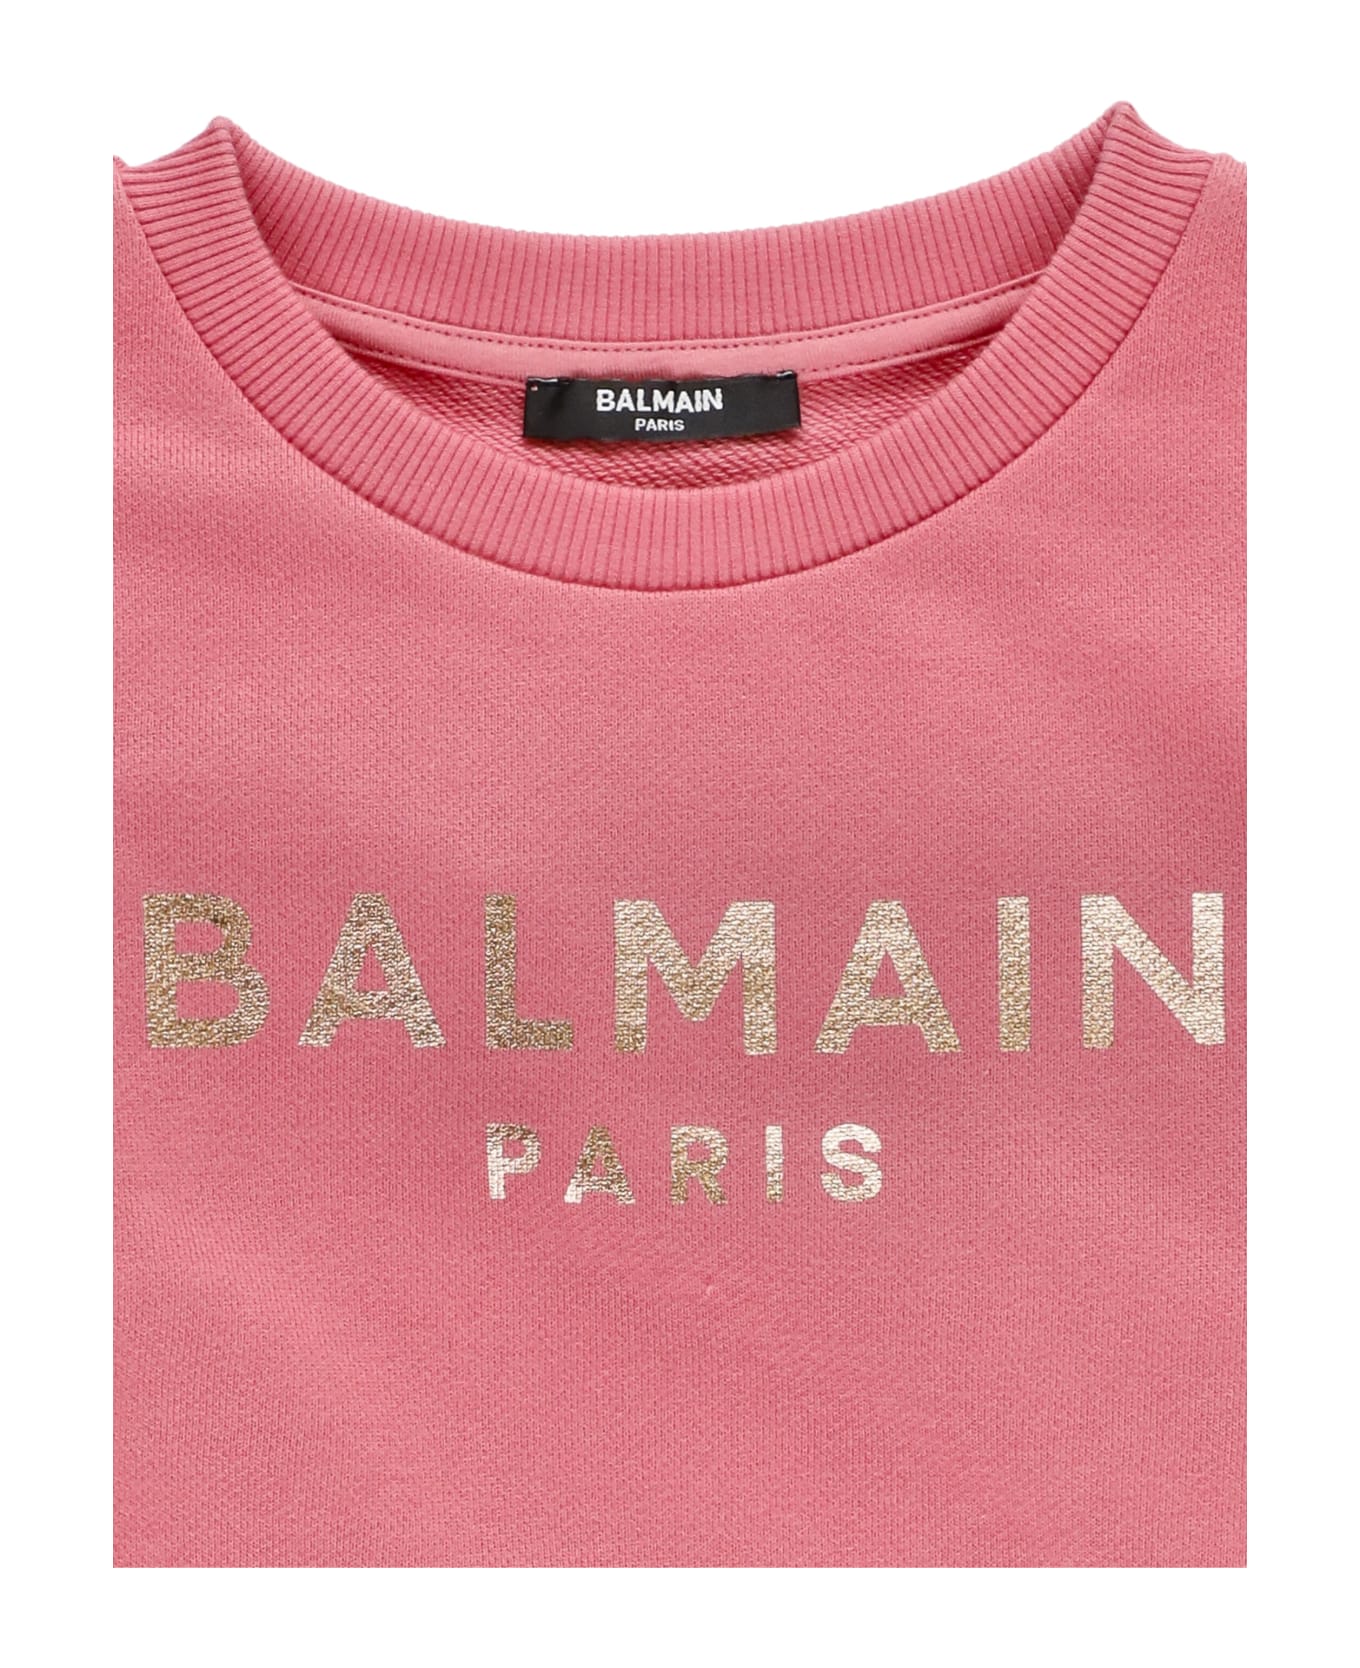 Balmain Logoed Sweater - Pink